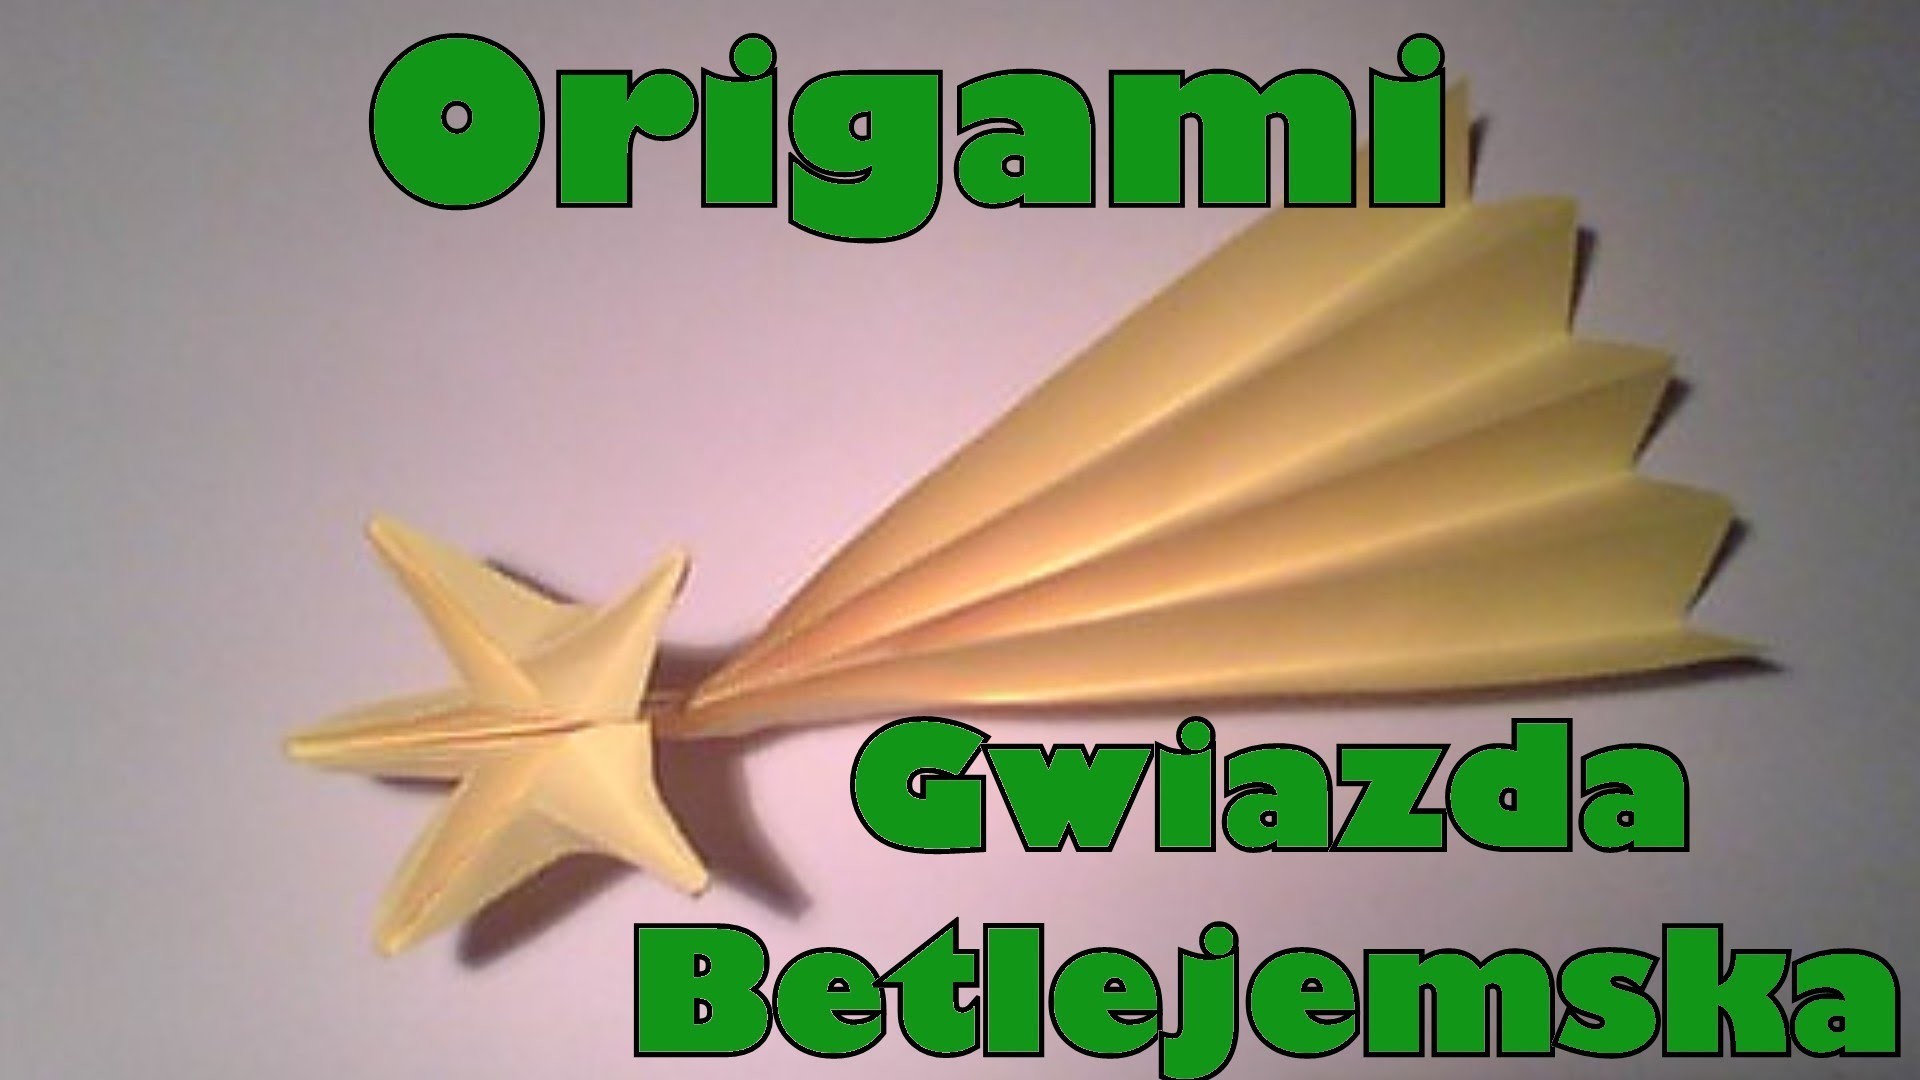 Origami - Gwiazda betlejemska